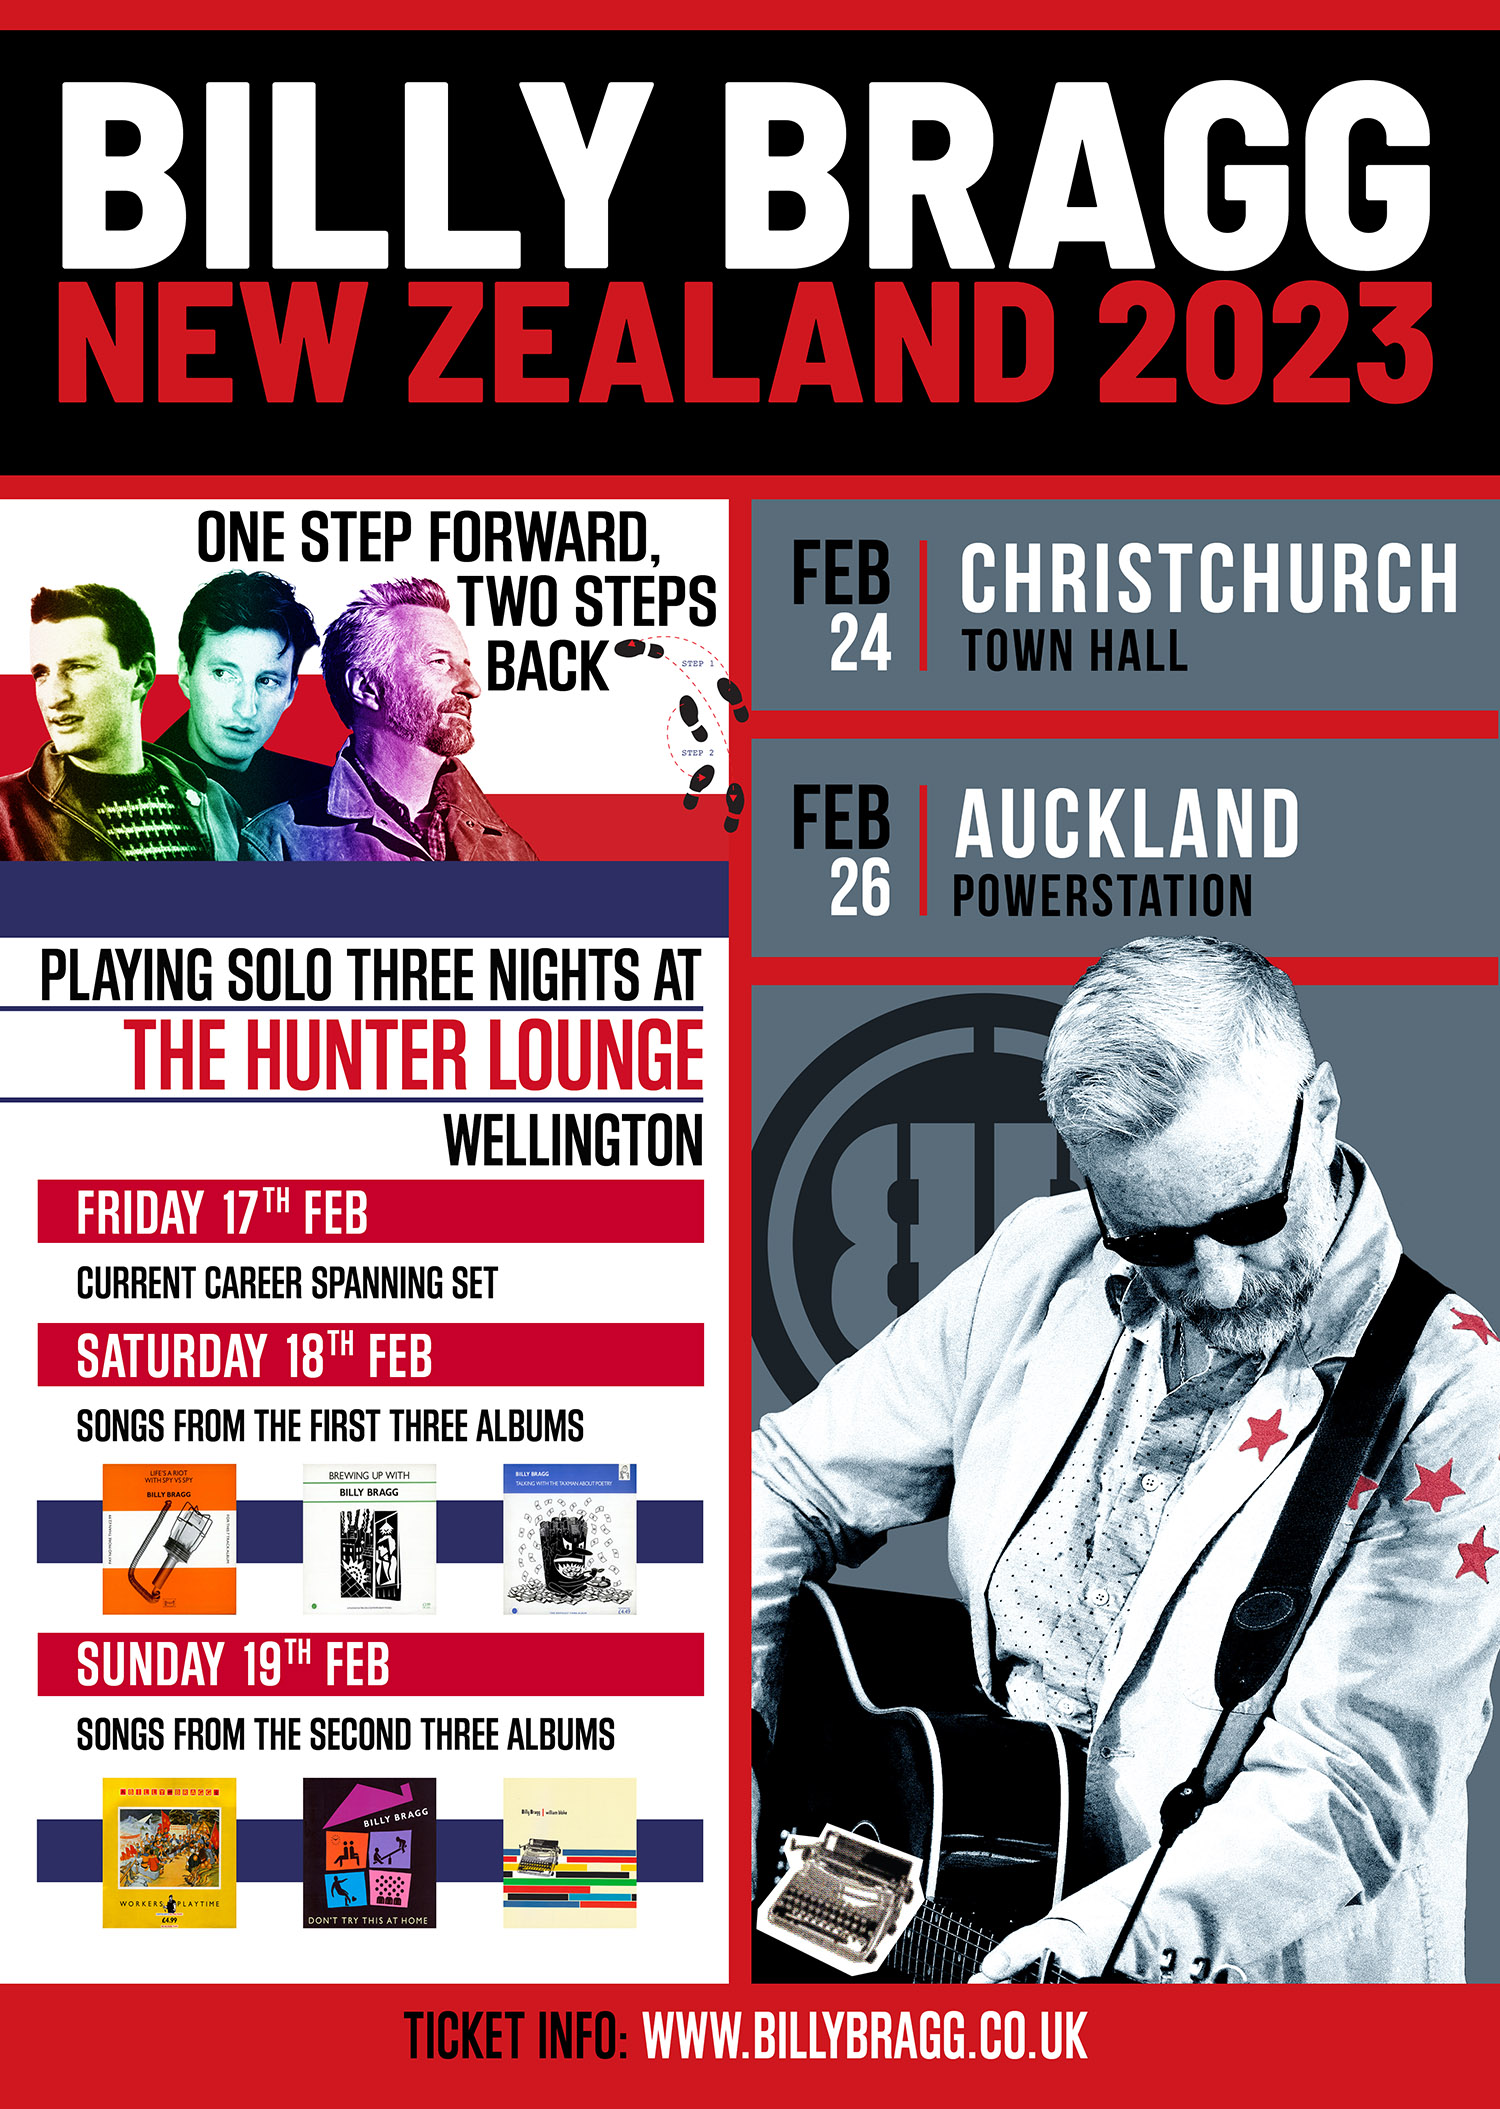 https://www.handsometours.com/wp-content/uploads/2022/05/BB_NZ23_combined_A3-copy.jpg